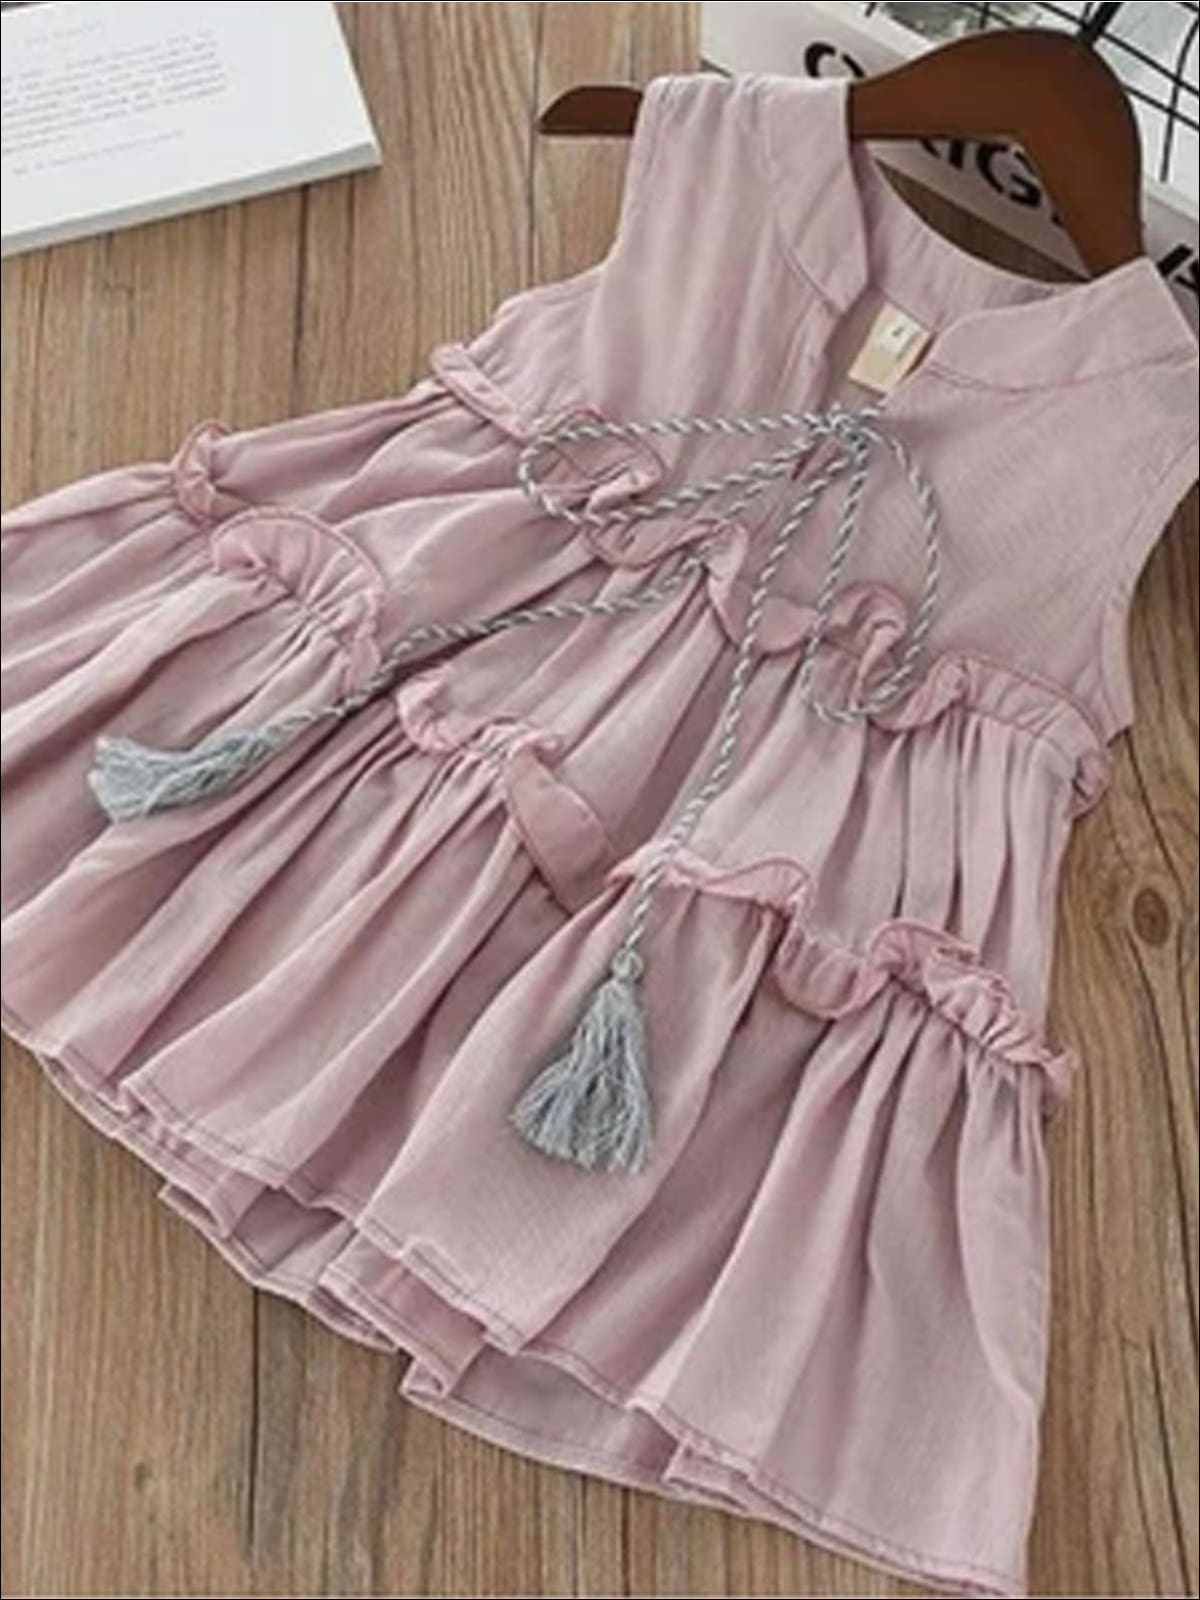 Girls Sleeveless Cotton Ruffled Summer Tunic Dress - Pink / 3T - Girls Spring Casual Dress